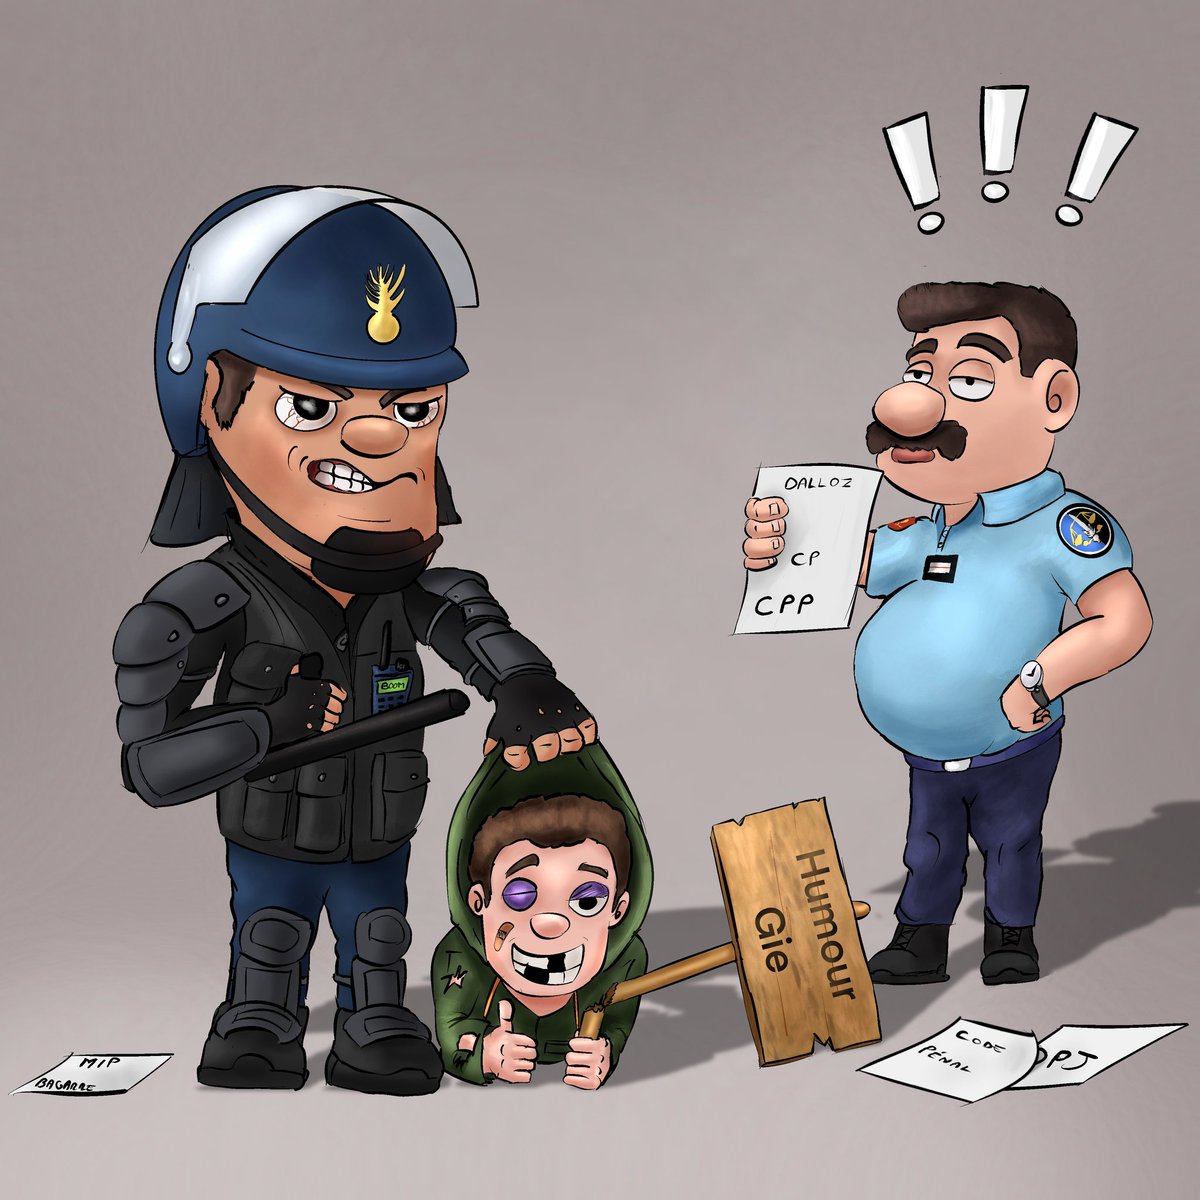 Petit dessin du stéréotype GD et GM #humour #gendarmerie #police #fun #funny #art #painting #digitalart #procreate #digitalpainting #moblo #gd #gm #Gendarme #bd #bandedessinée #cartoon #dessin #drawing #characterdesign